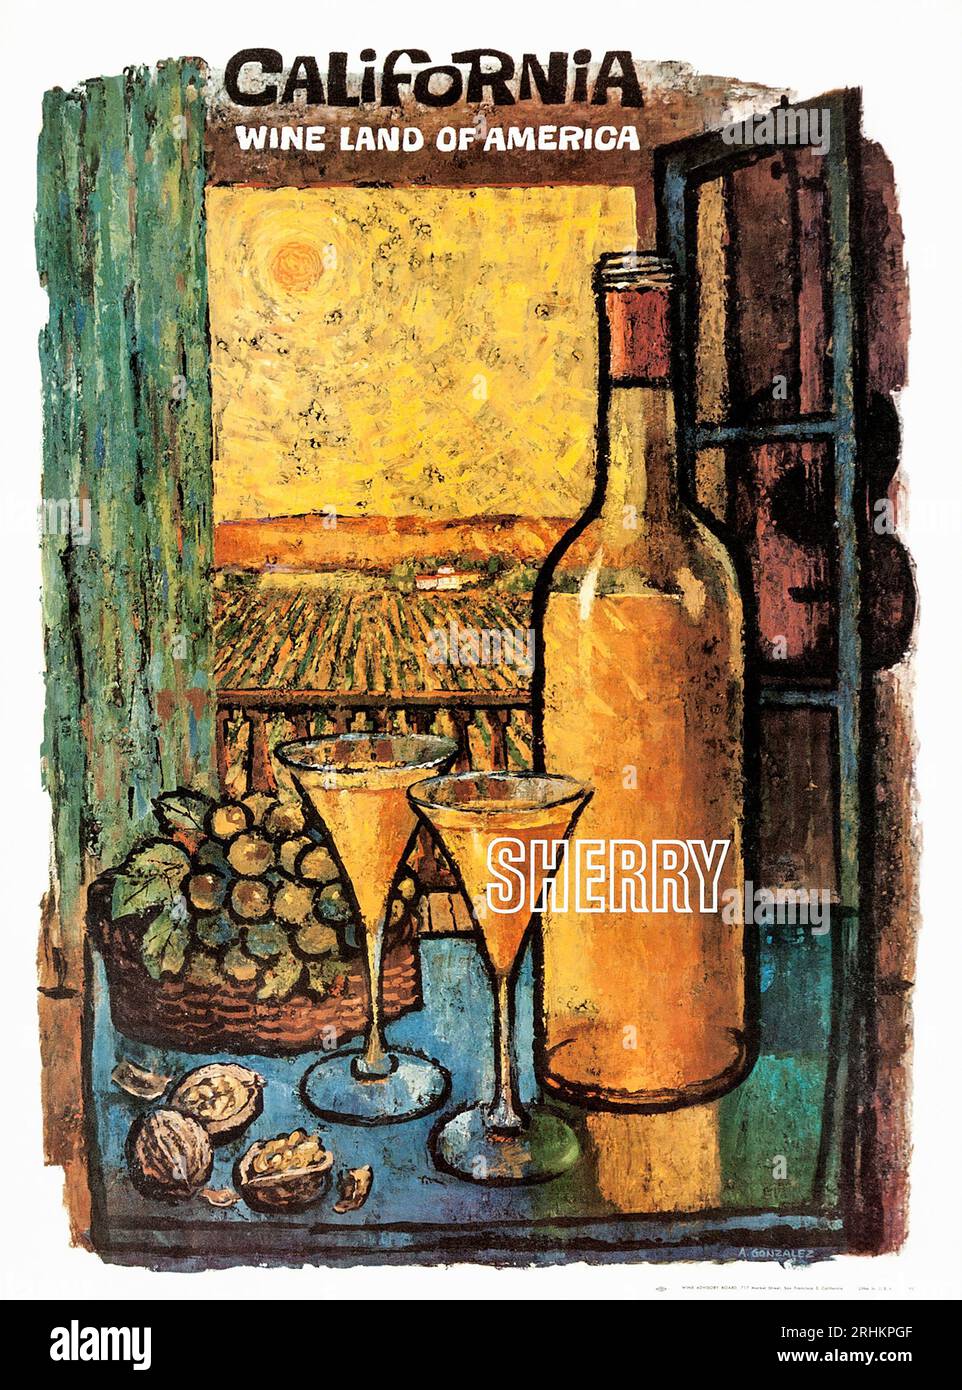 Sherry - Californie - Wine Land of America (Wine Advisory Board, années 1960). Affiche de voyage Banque D'Images